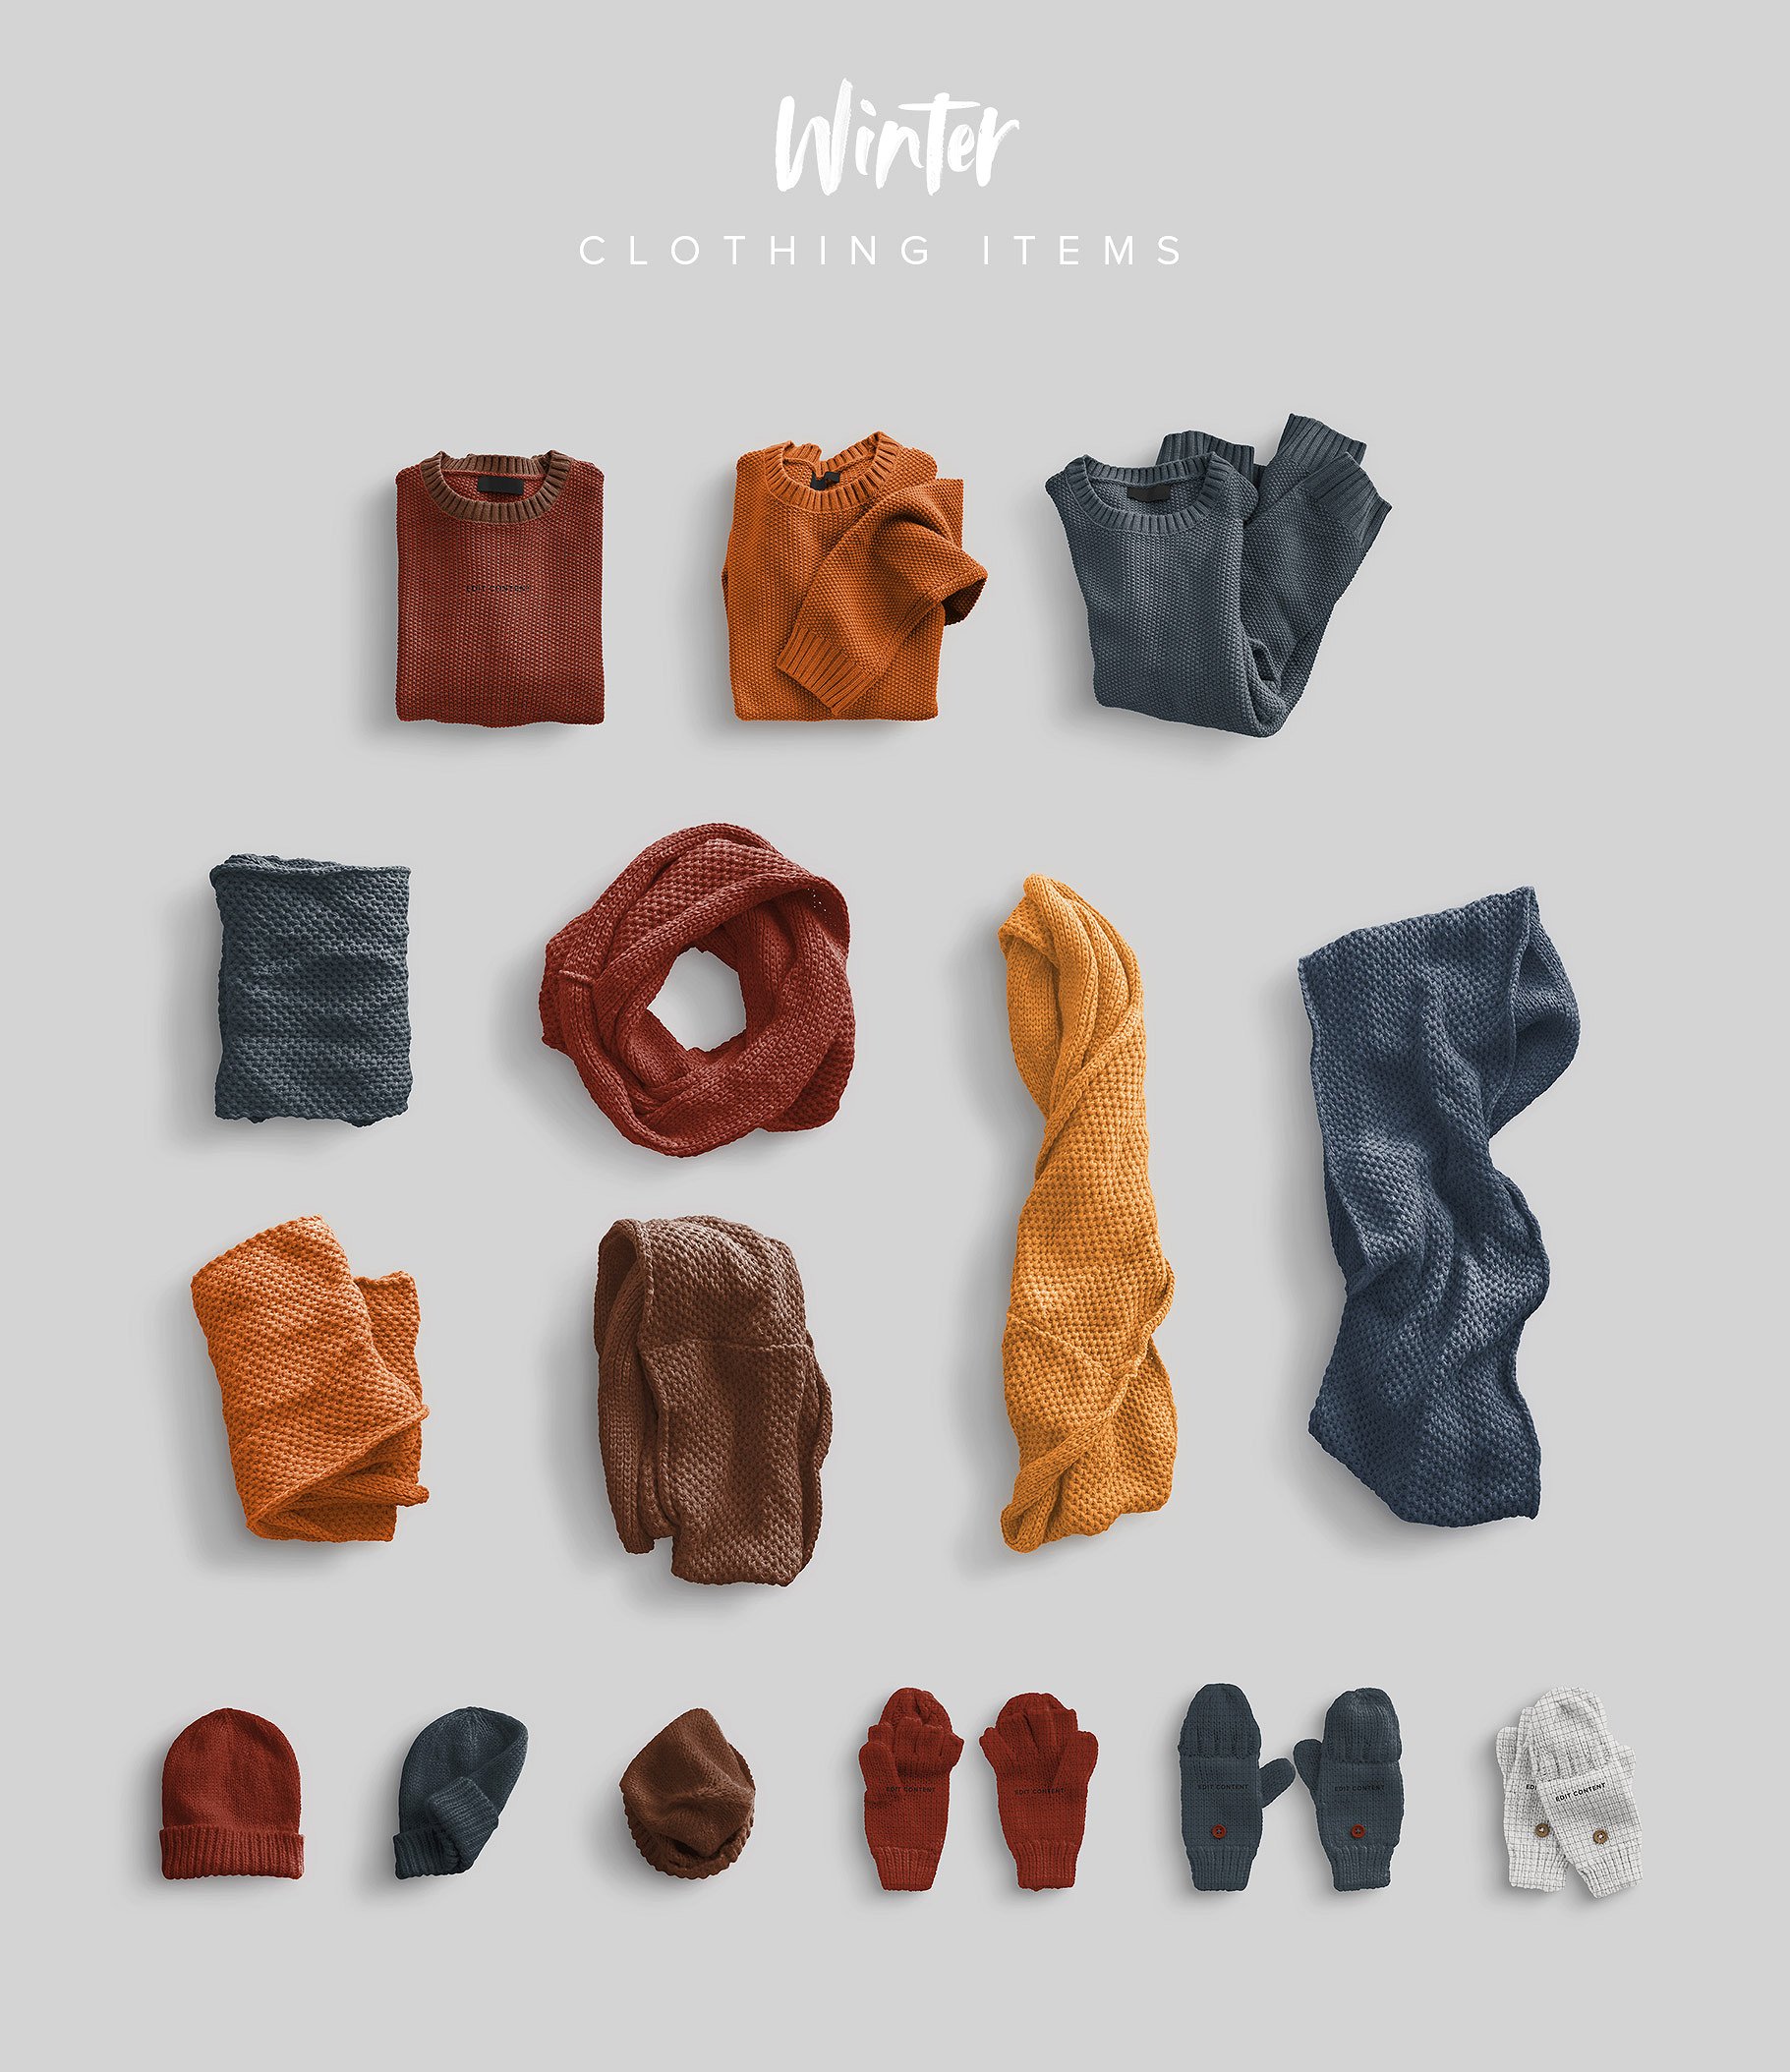 01-winter-collection-clothing-items-customscene-.jpg